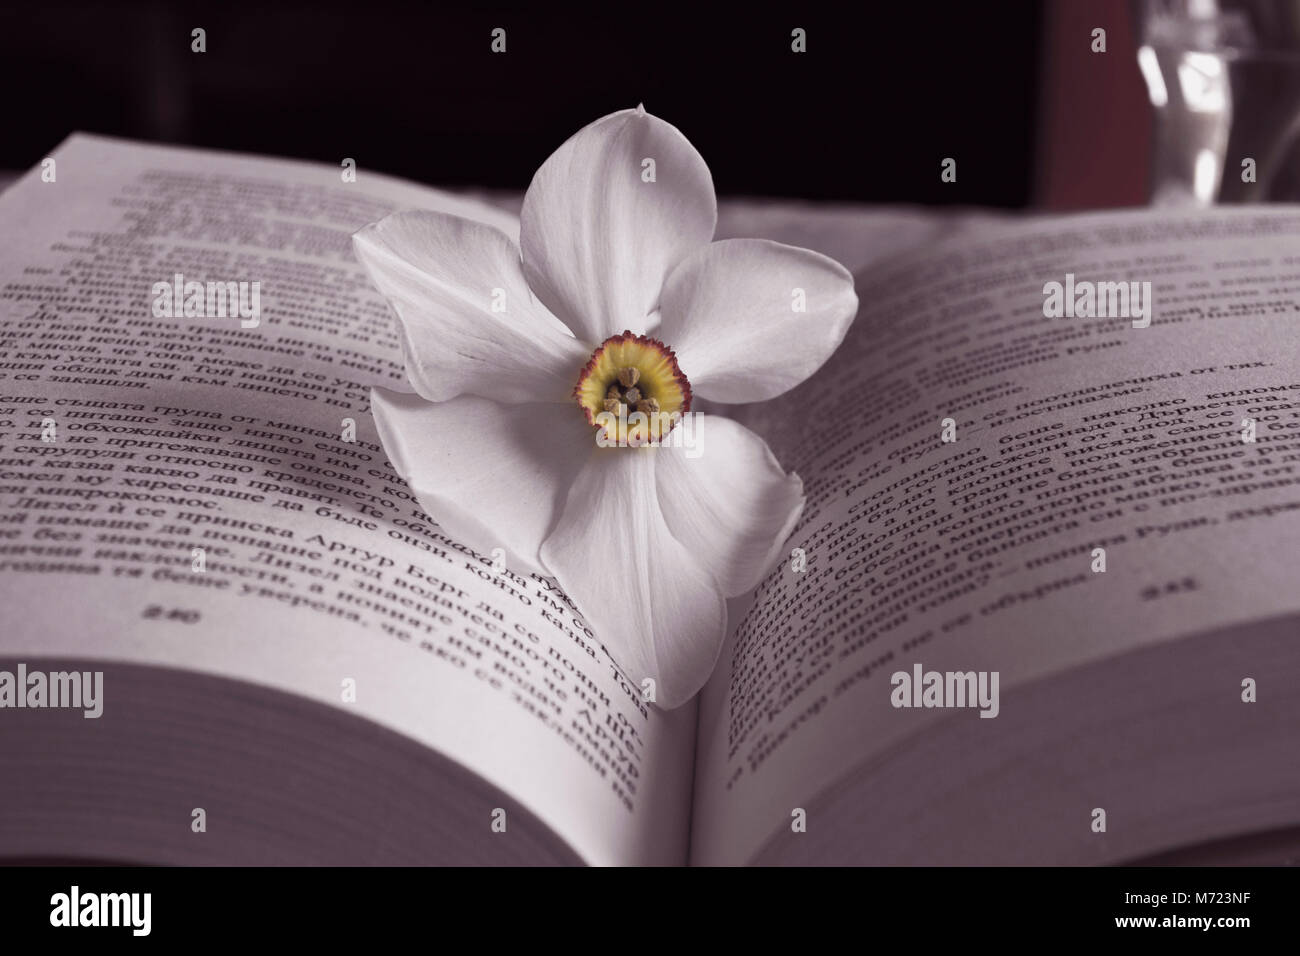 Daffodill On a Book Stock Photo